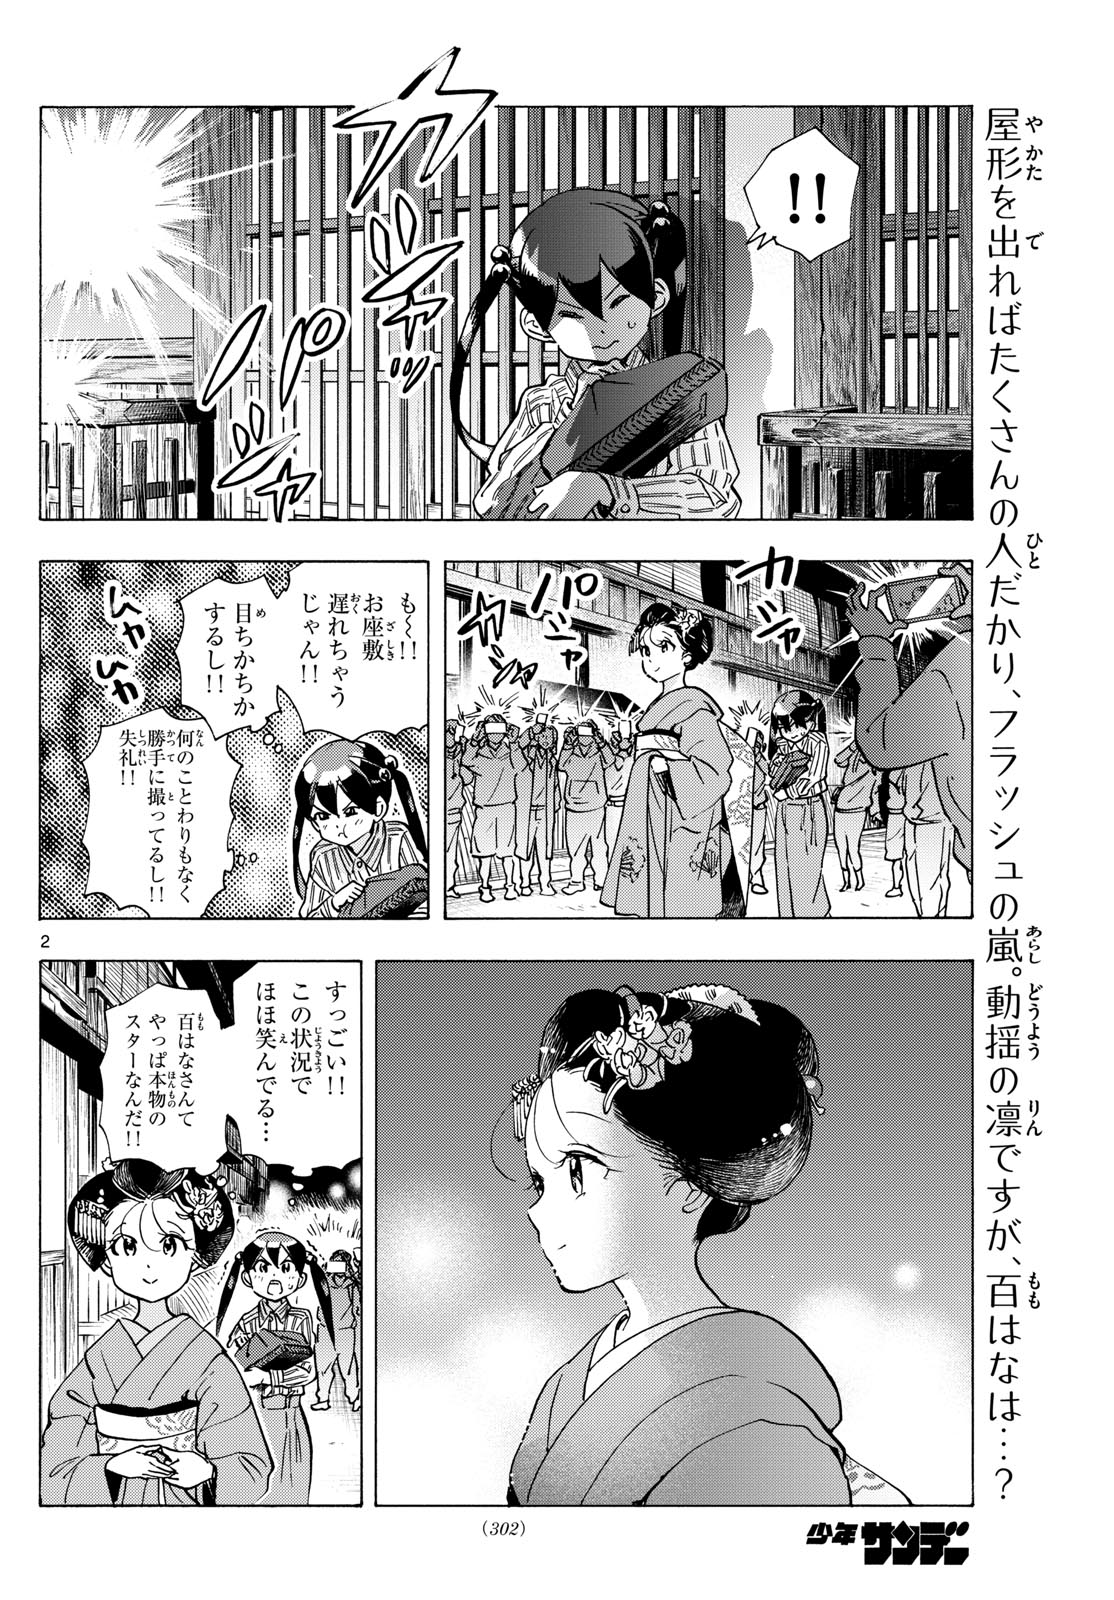 Maiko-san Chi no Makanai-san - Chapter 290 - Page 2